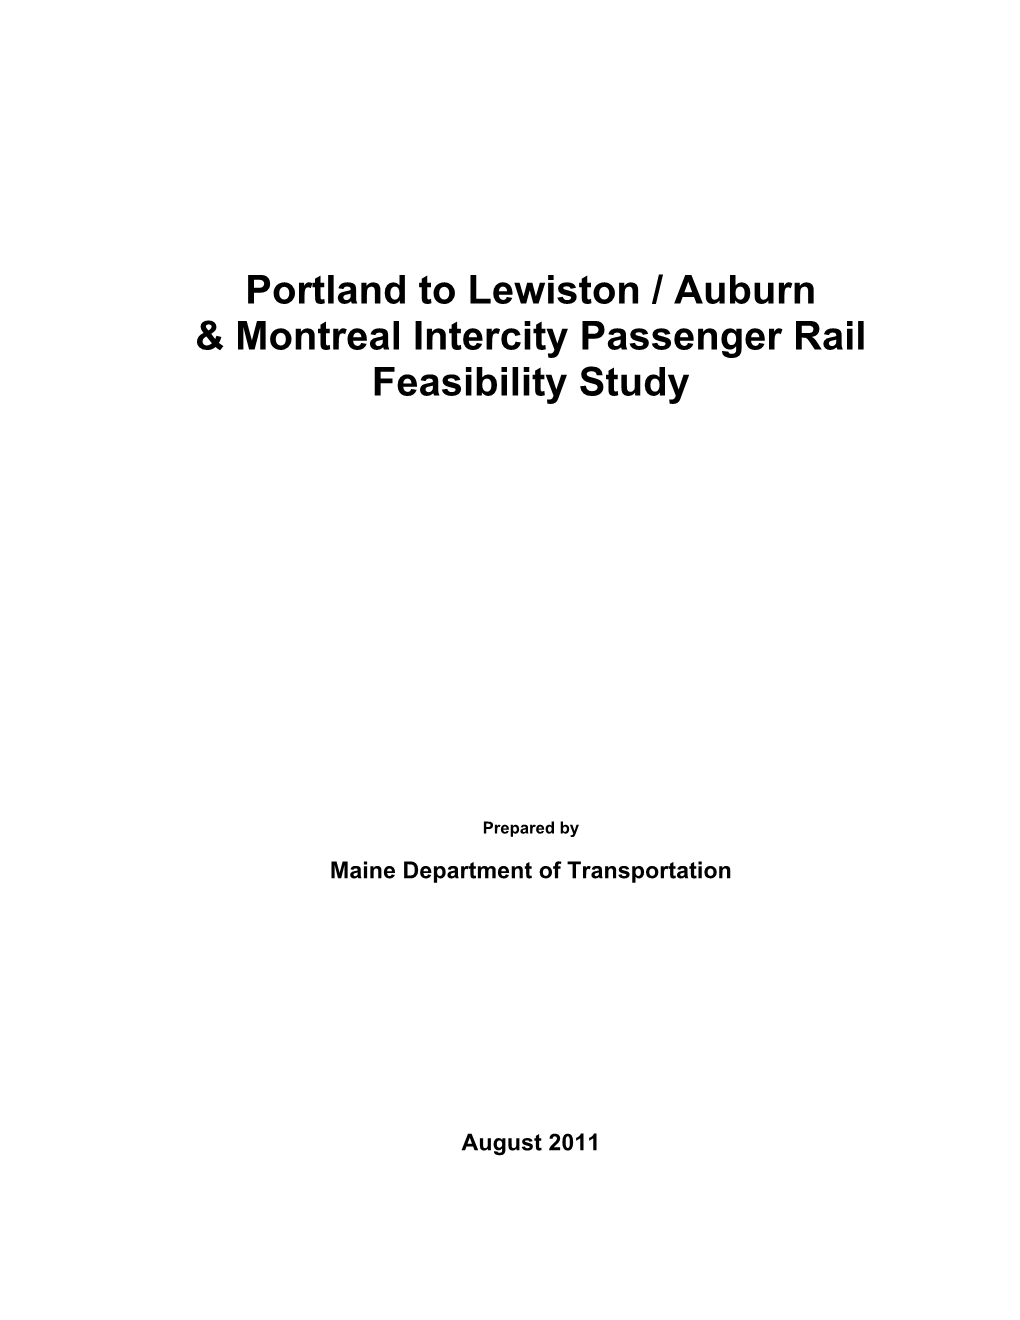 Portland to Lewiston / Auburn & Montreal Intercity Passenger Rail